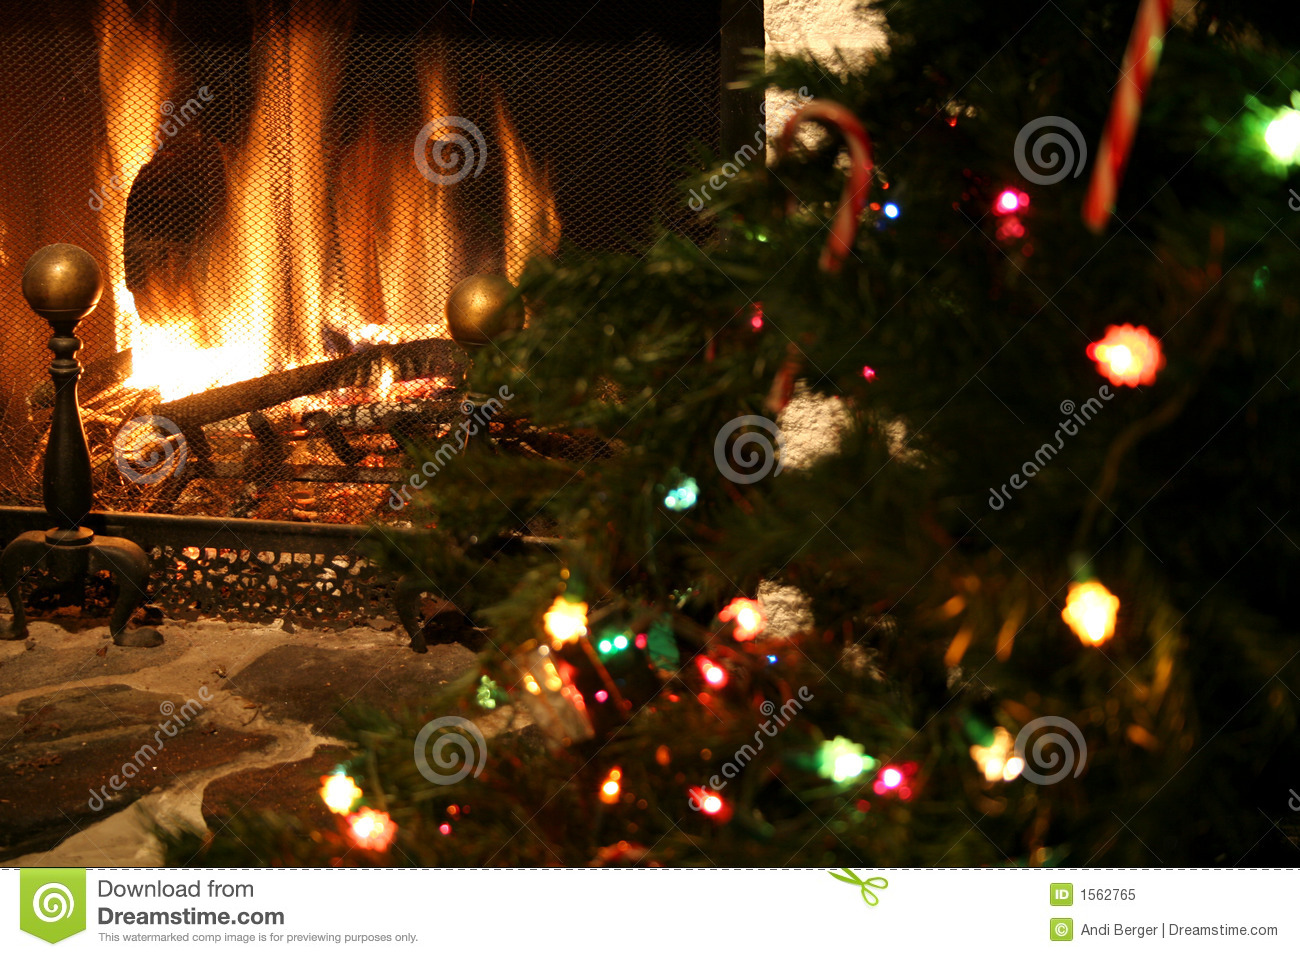 Fireplace   Christmas Tree Royalty Free Stock Photo   Image  1562765